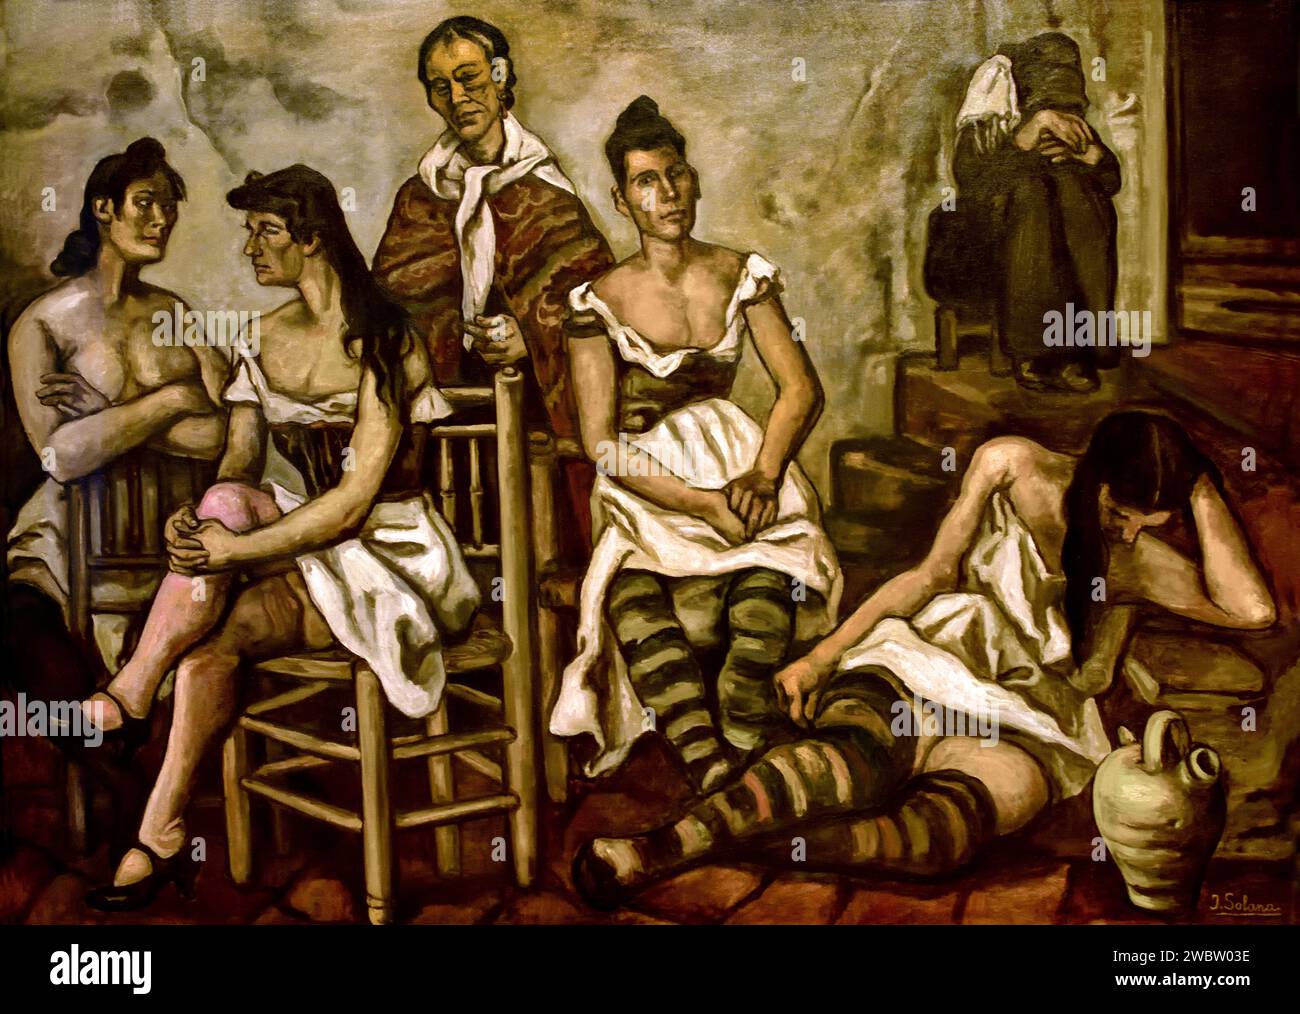 The Slum Bordell - The Slum Girls 1934 José Solana, (Gutiérrez-Solana) 1886 - 1949 Spanien Stockfoto